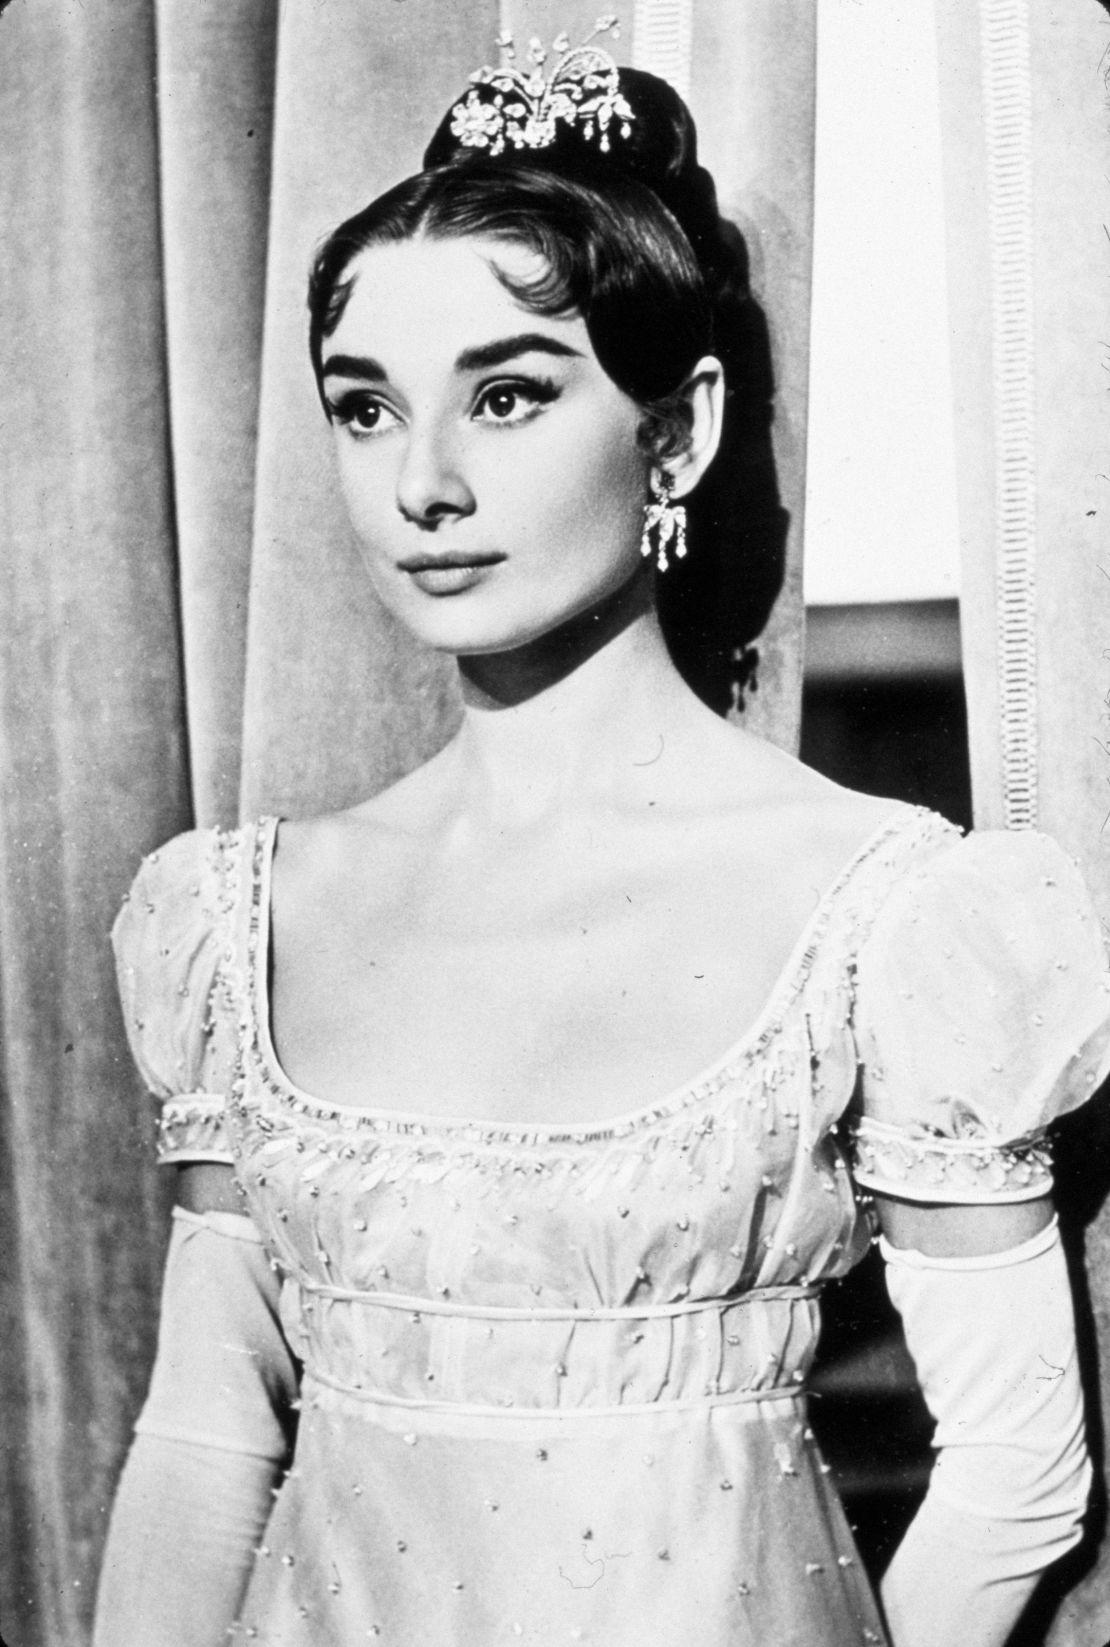 Audrey Hepburn wears an empire line dress designed by Fernanda Gattinoni for the 1956 film "War and Peace."